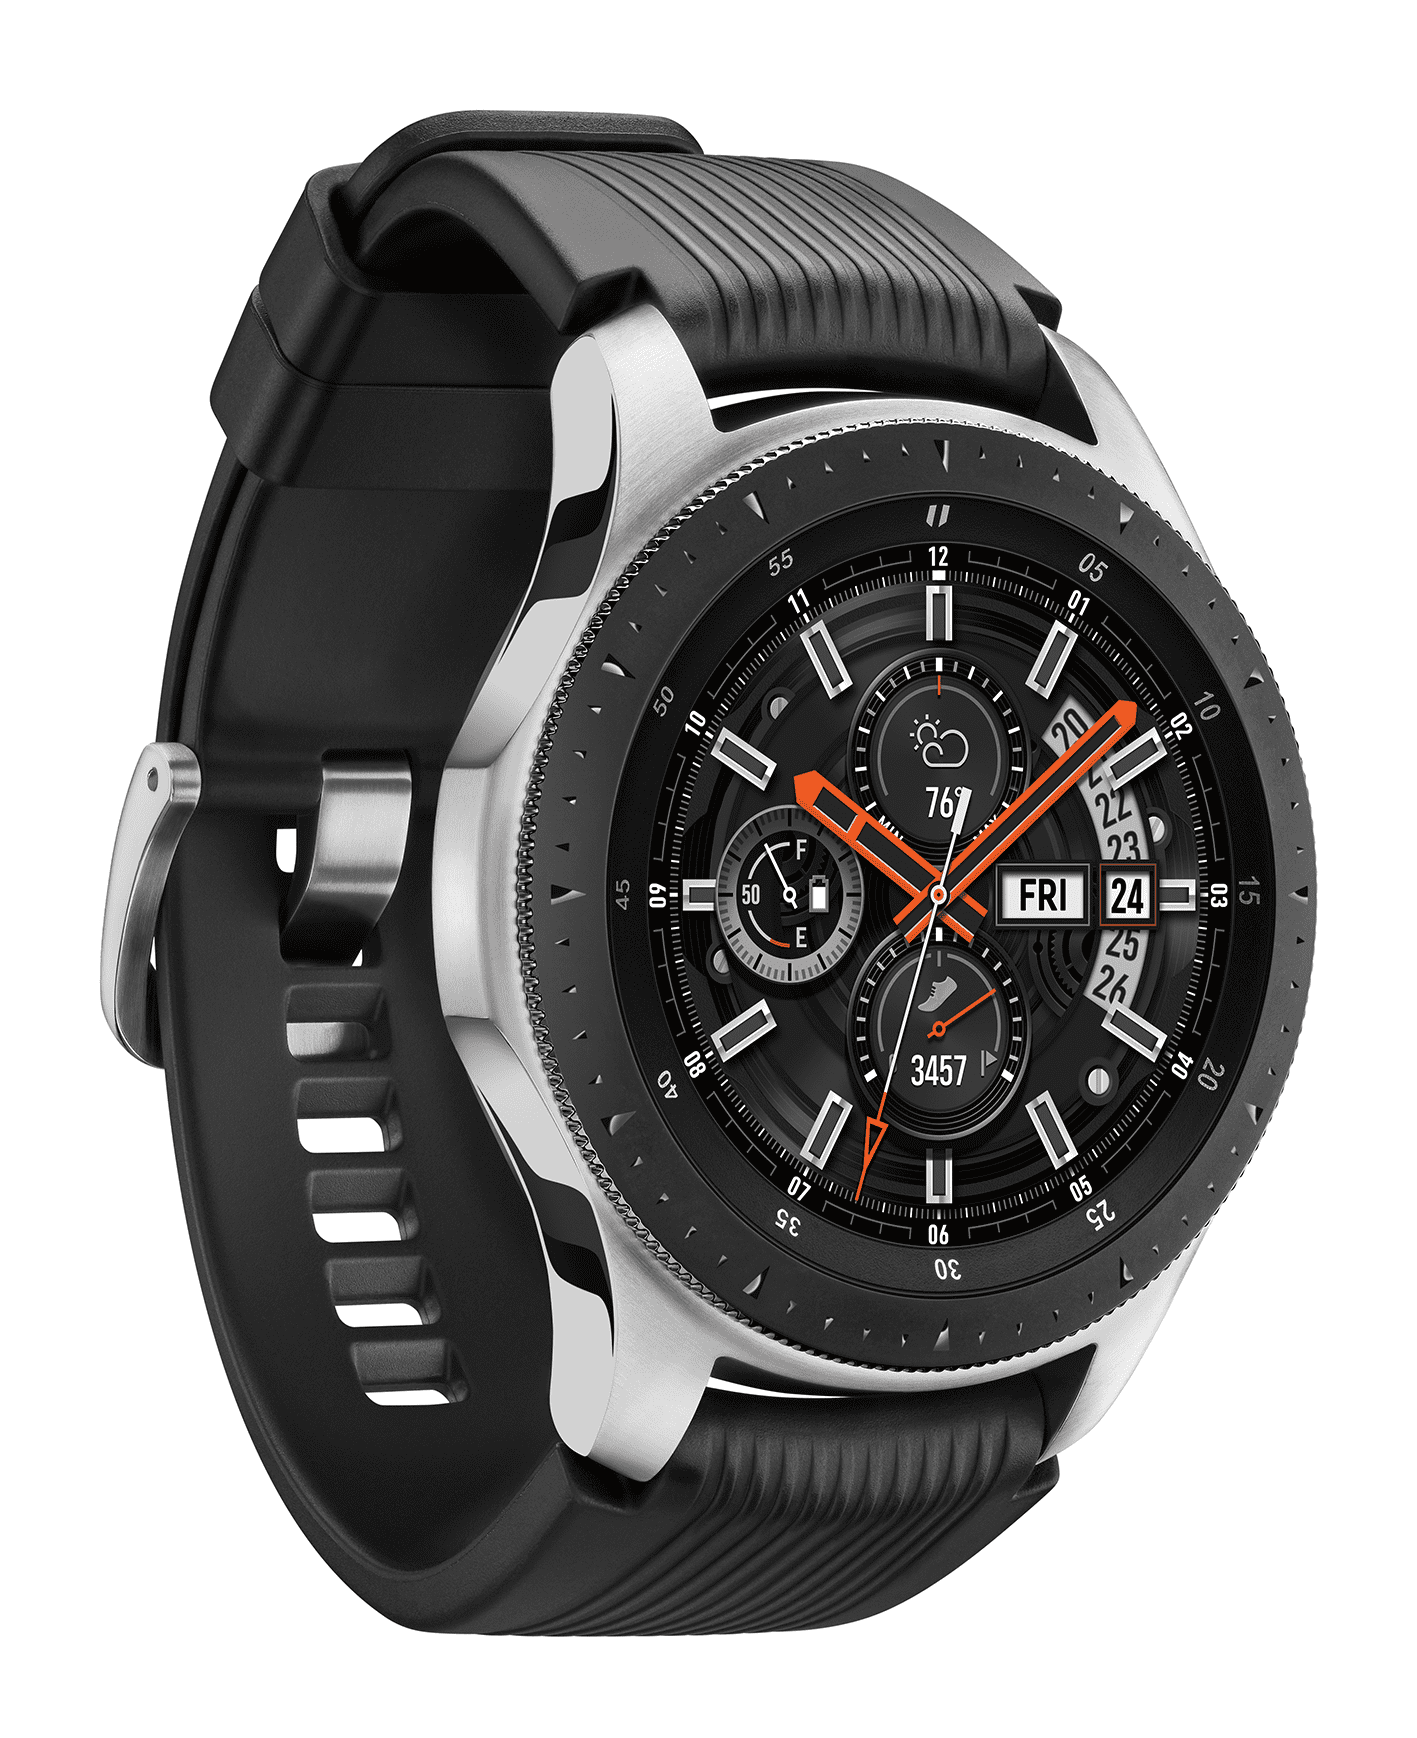 Metafor Høring Produktivitet SAMSUNG Galaxy Watch - Bluetooth Smart Watch (46mm) - Silver - SM-R800NZSAXAR  - Walmart.com